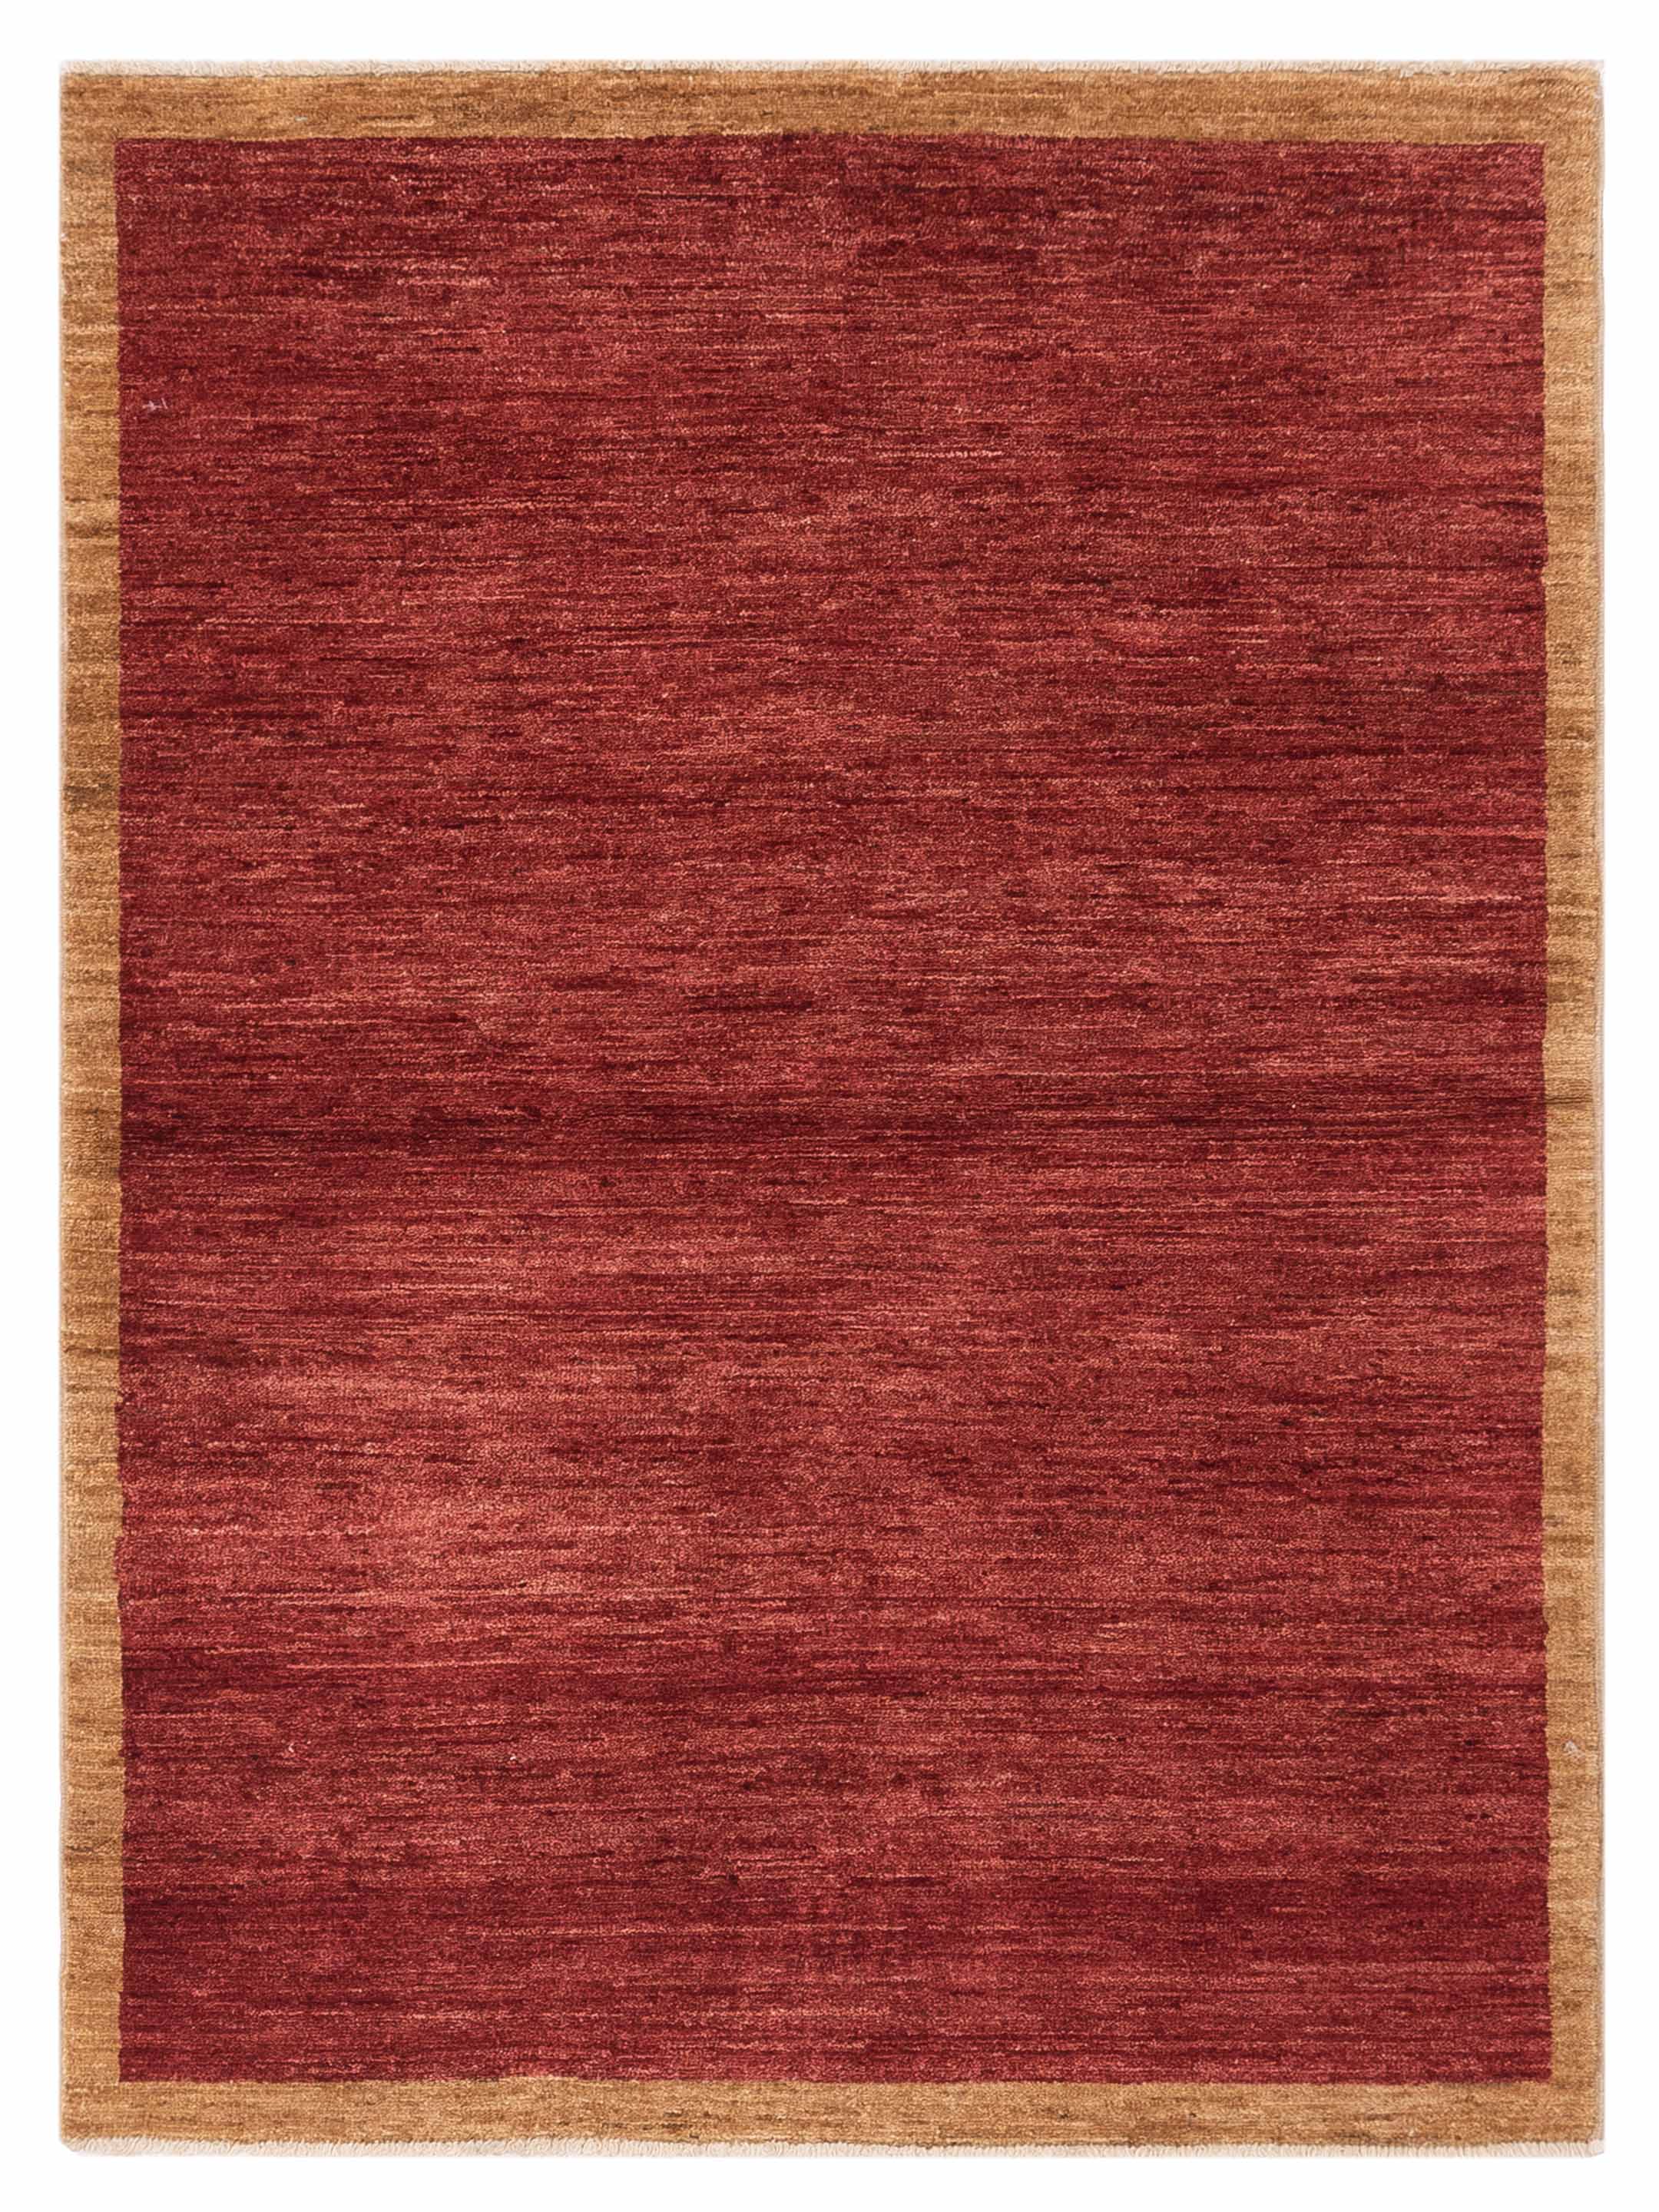 Qotan Contemporary Red Brown 4x6 Area Rug	